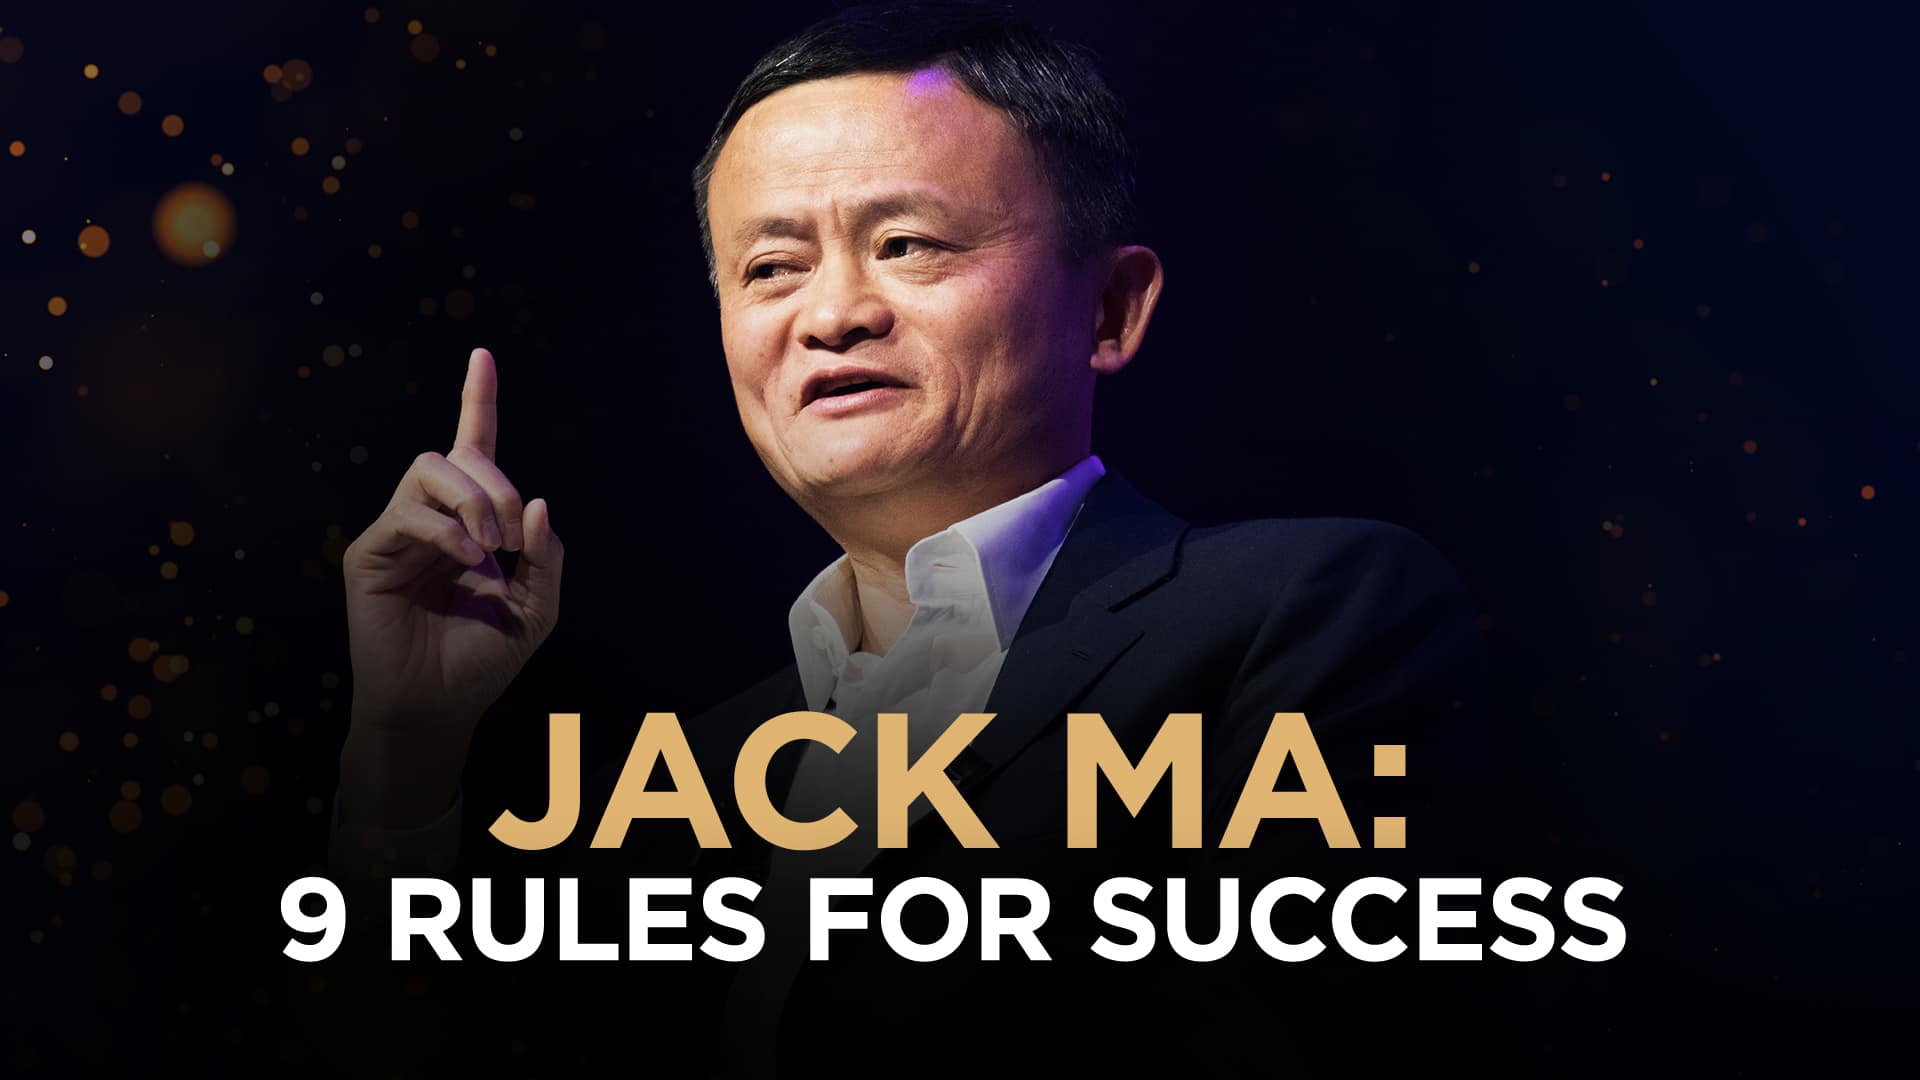 Jack-Ma-9-Rules-for-Success-V2